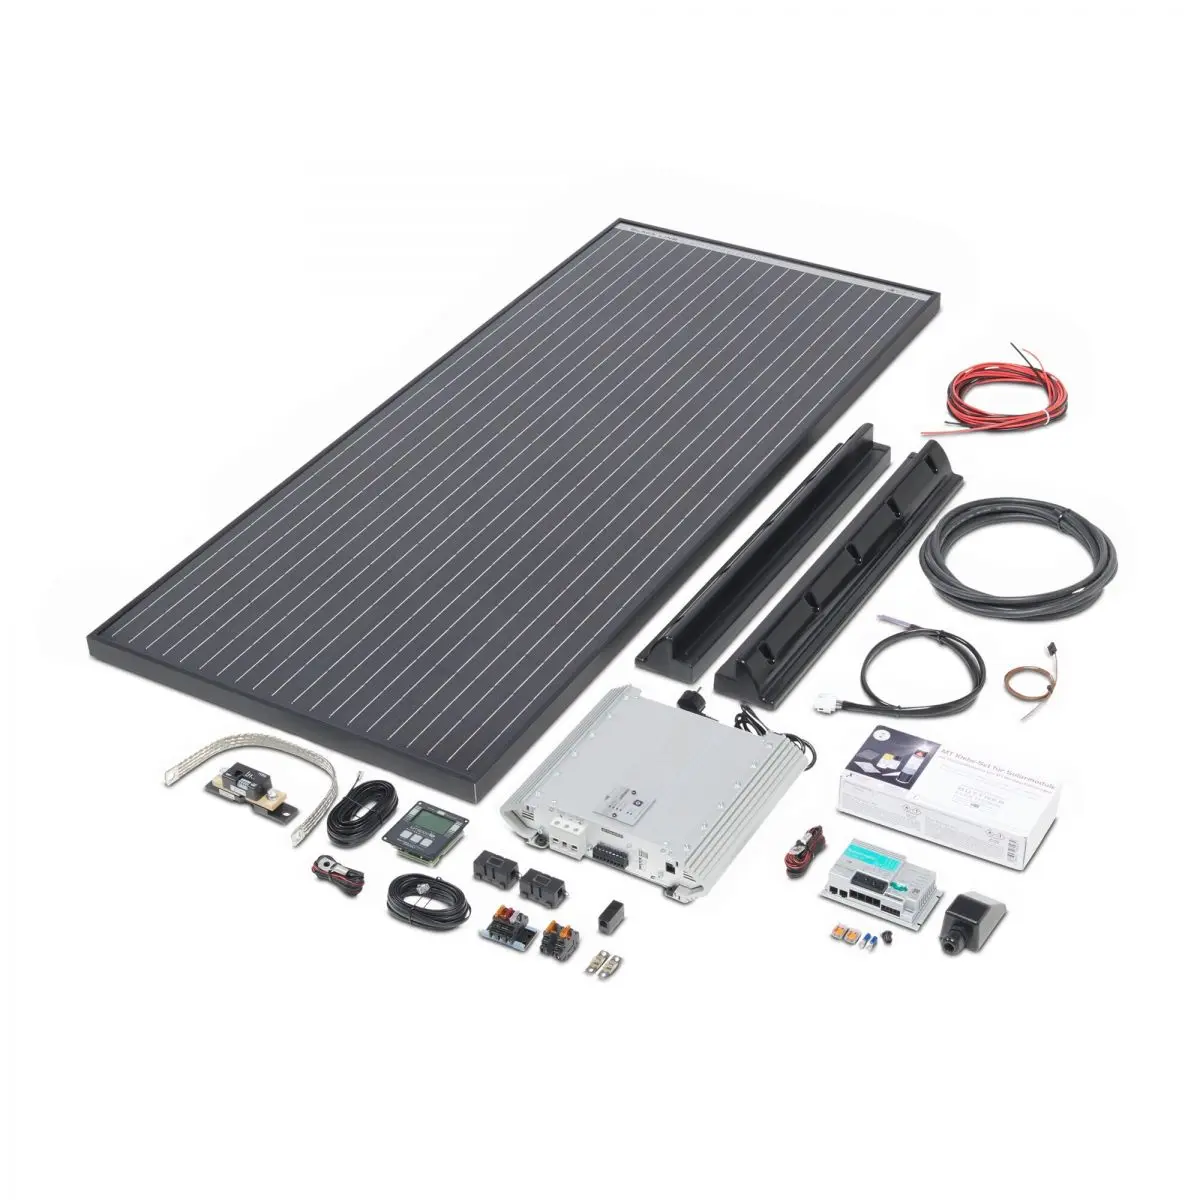 Kompletný solárny systém PowerPack Classic Power - 170 W, BCB 40/40, MT 5000 iQ